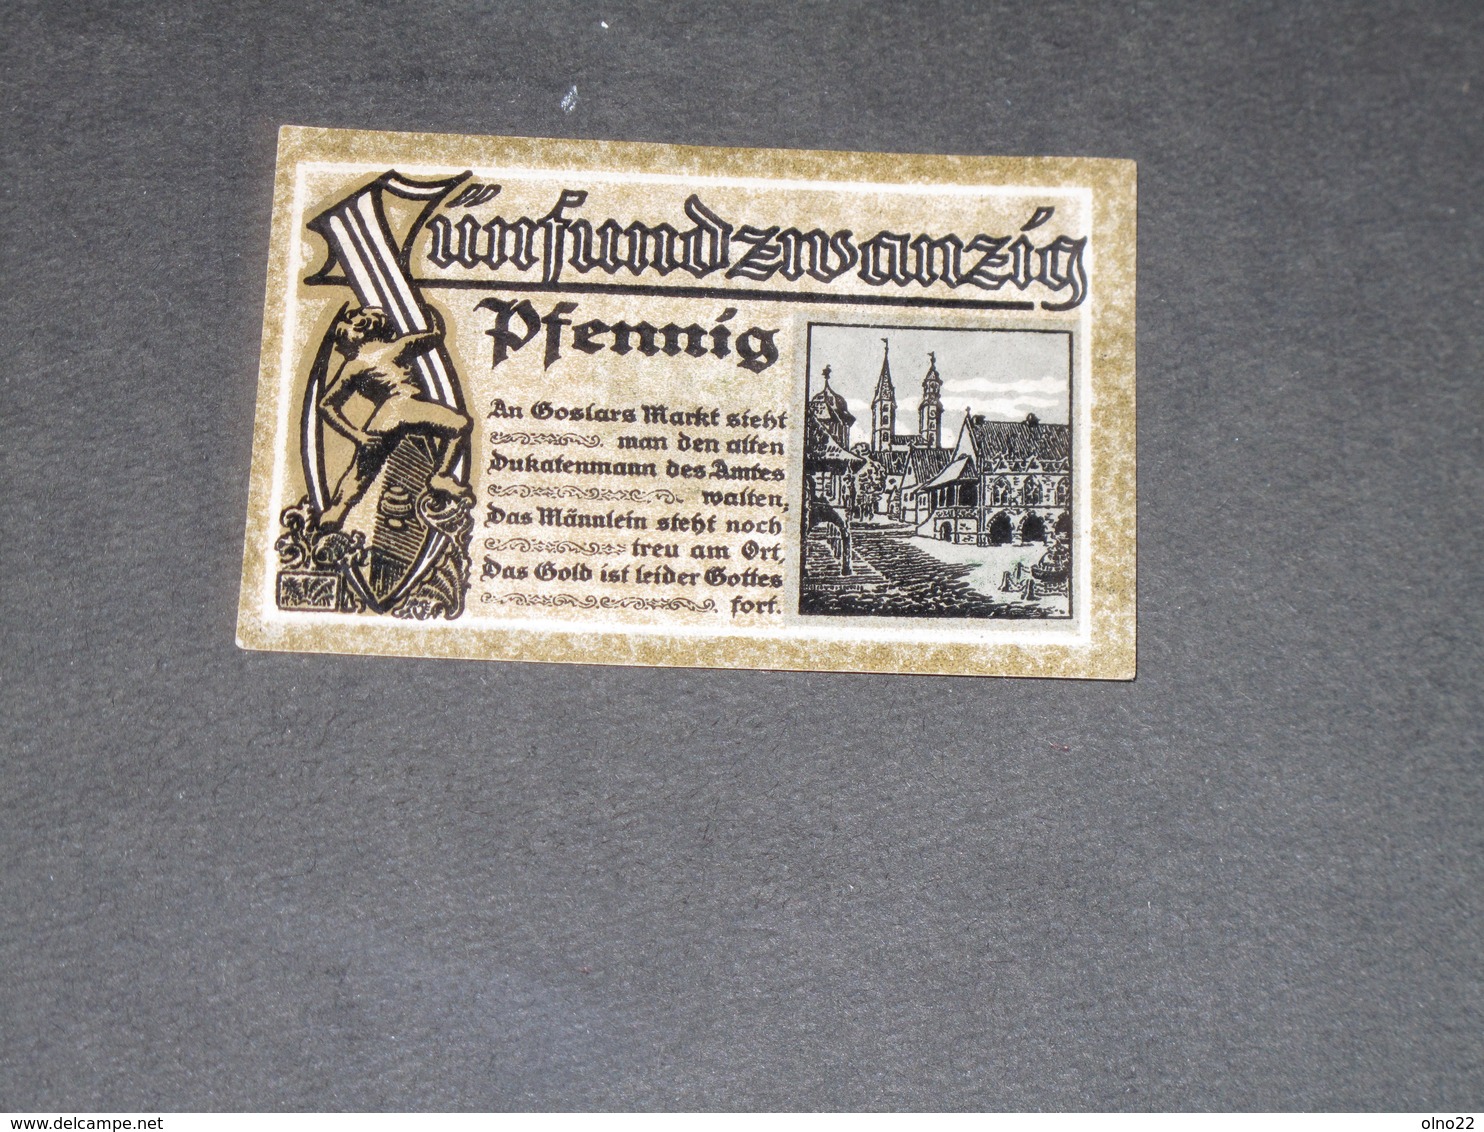 MOOSBURG - 1921 - 25 Phennige - Collezioni